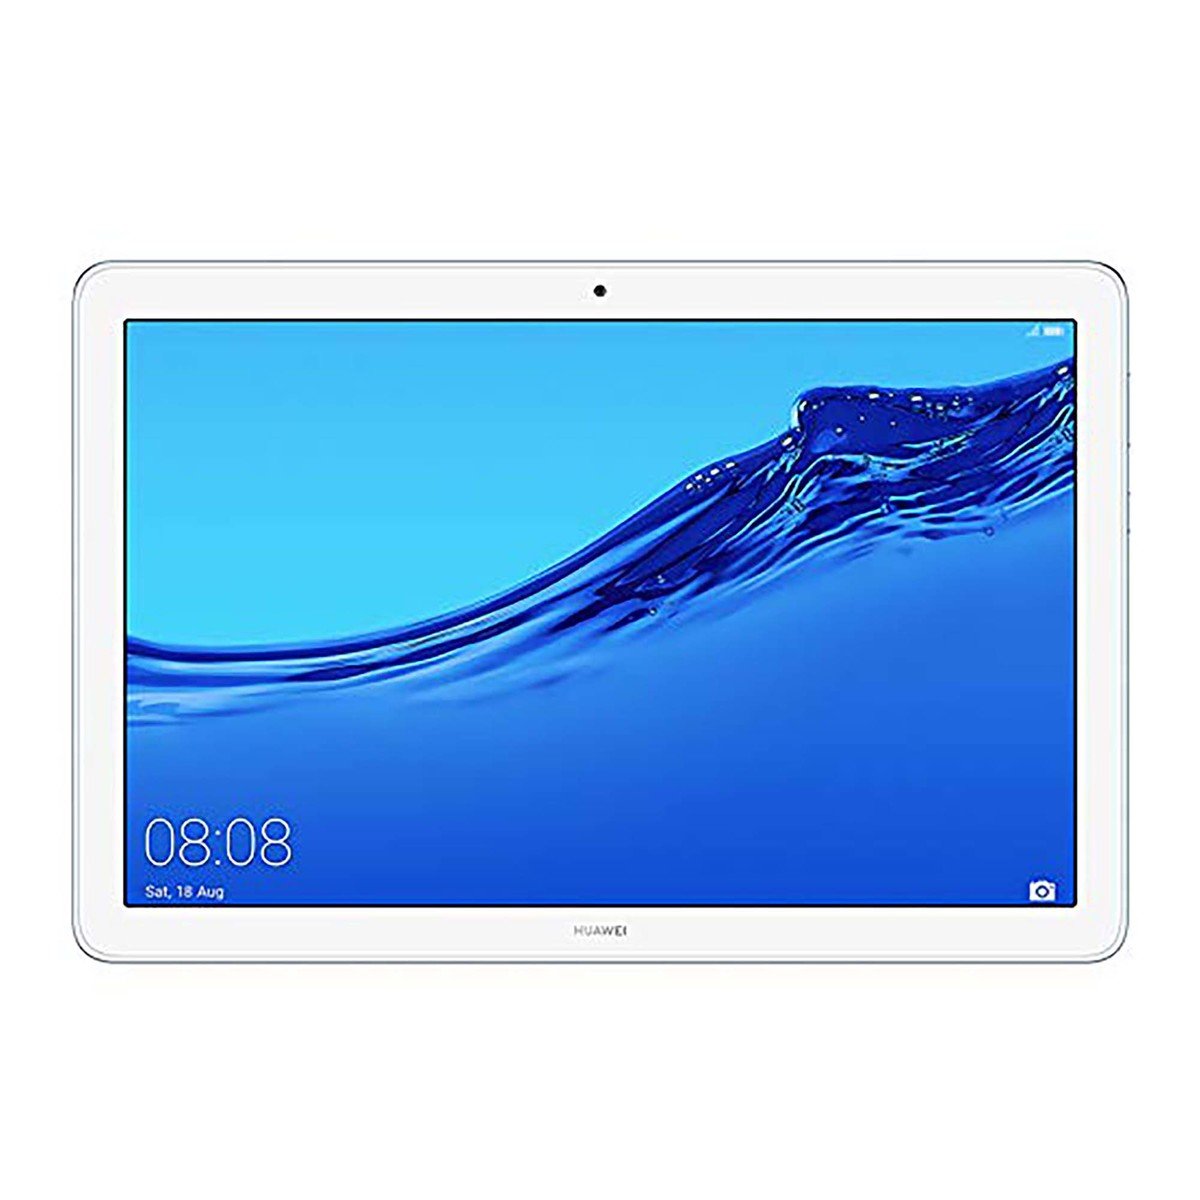 Huawei MediaPad T5 Tablet ,Wifi,32GB,3 GB RAM,10.1 inches IPS,Mist Blue